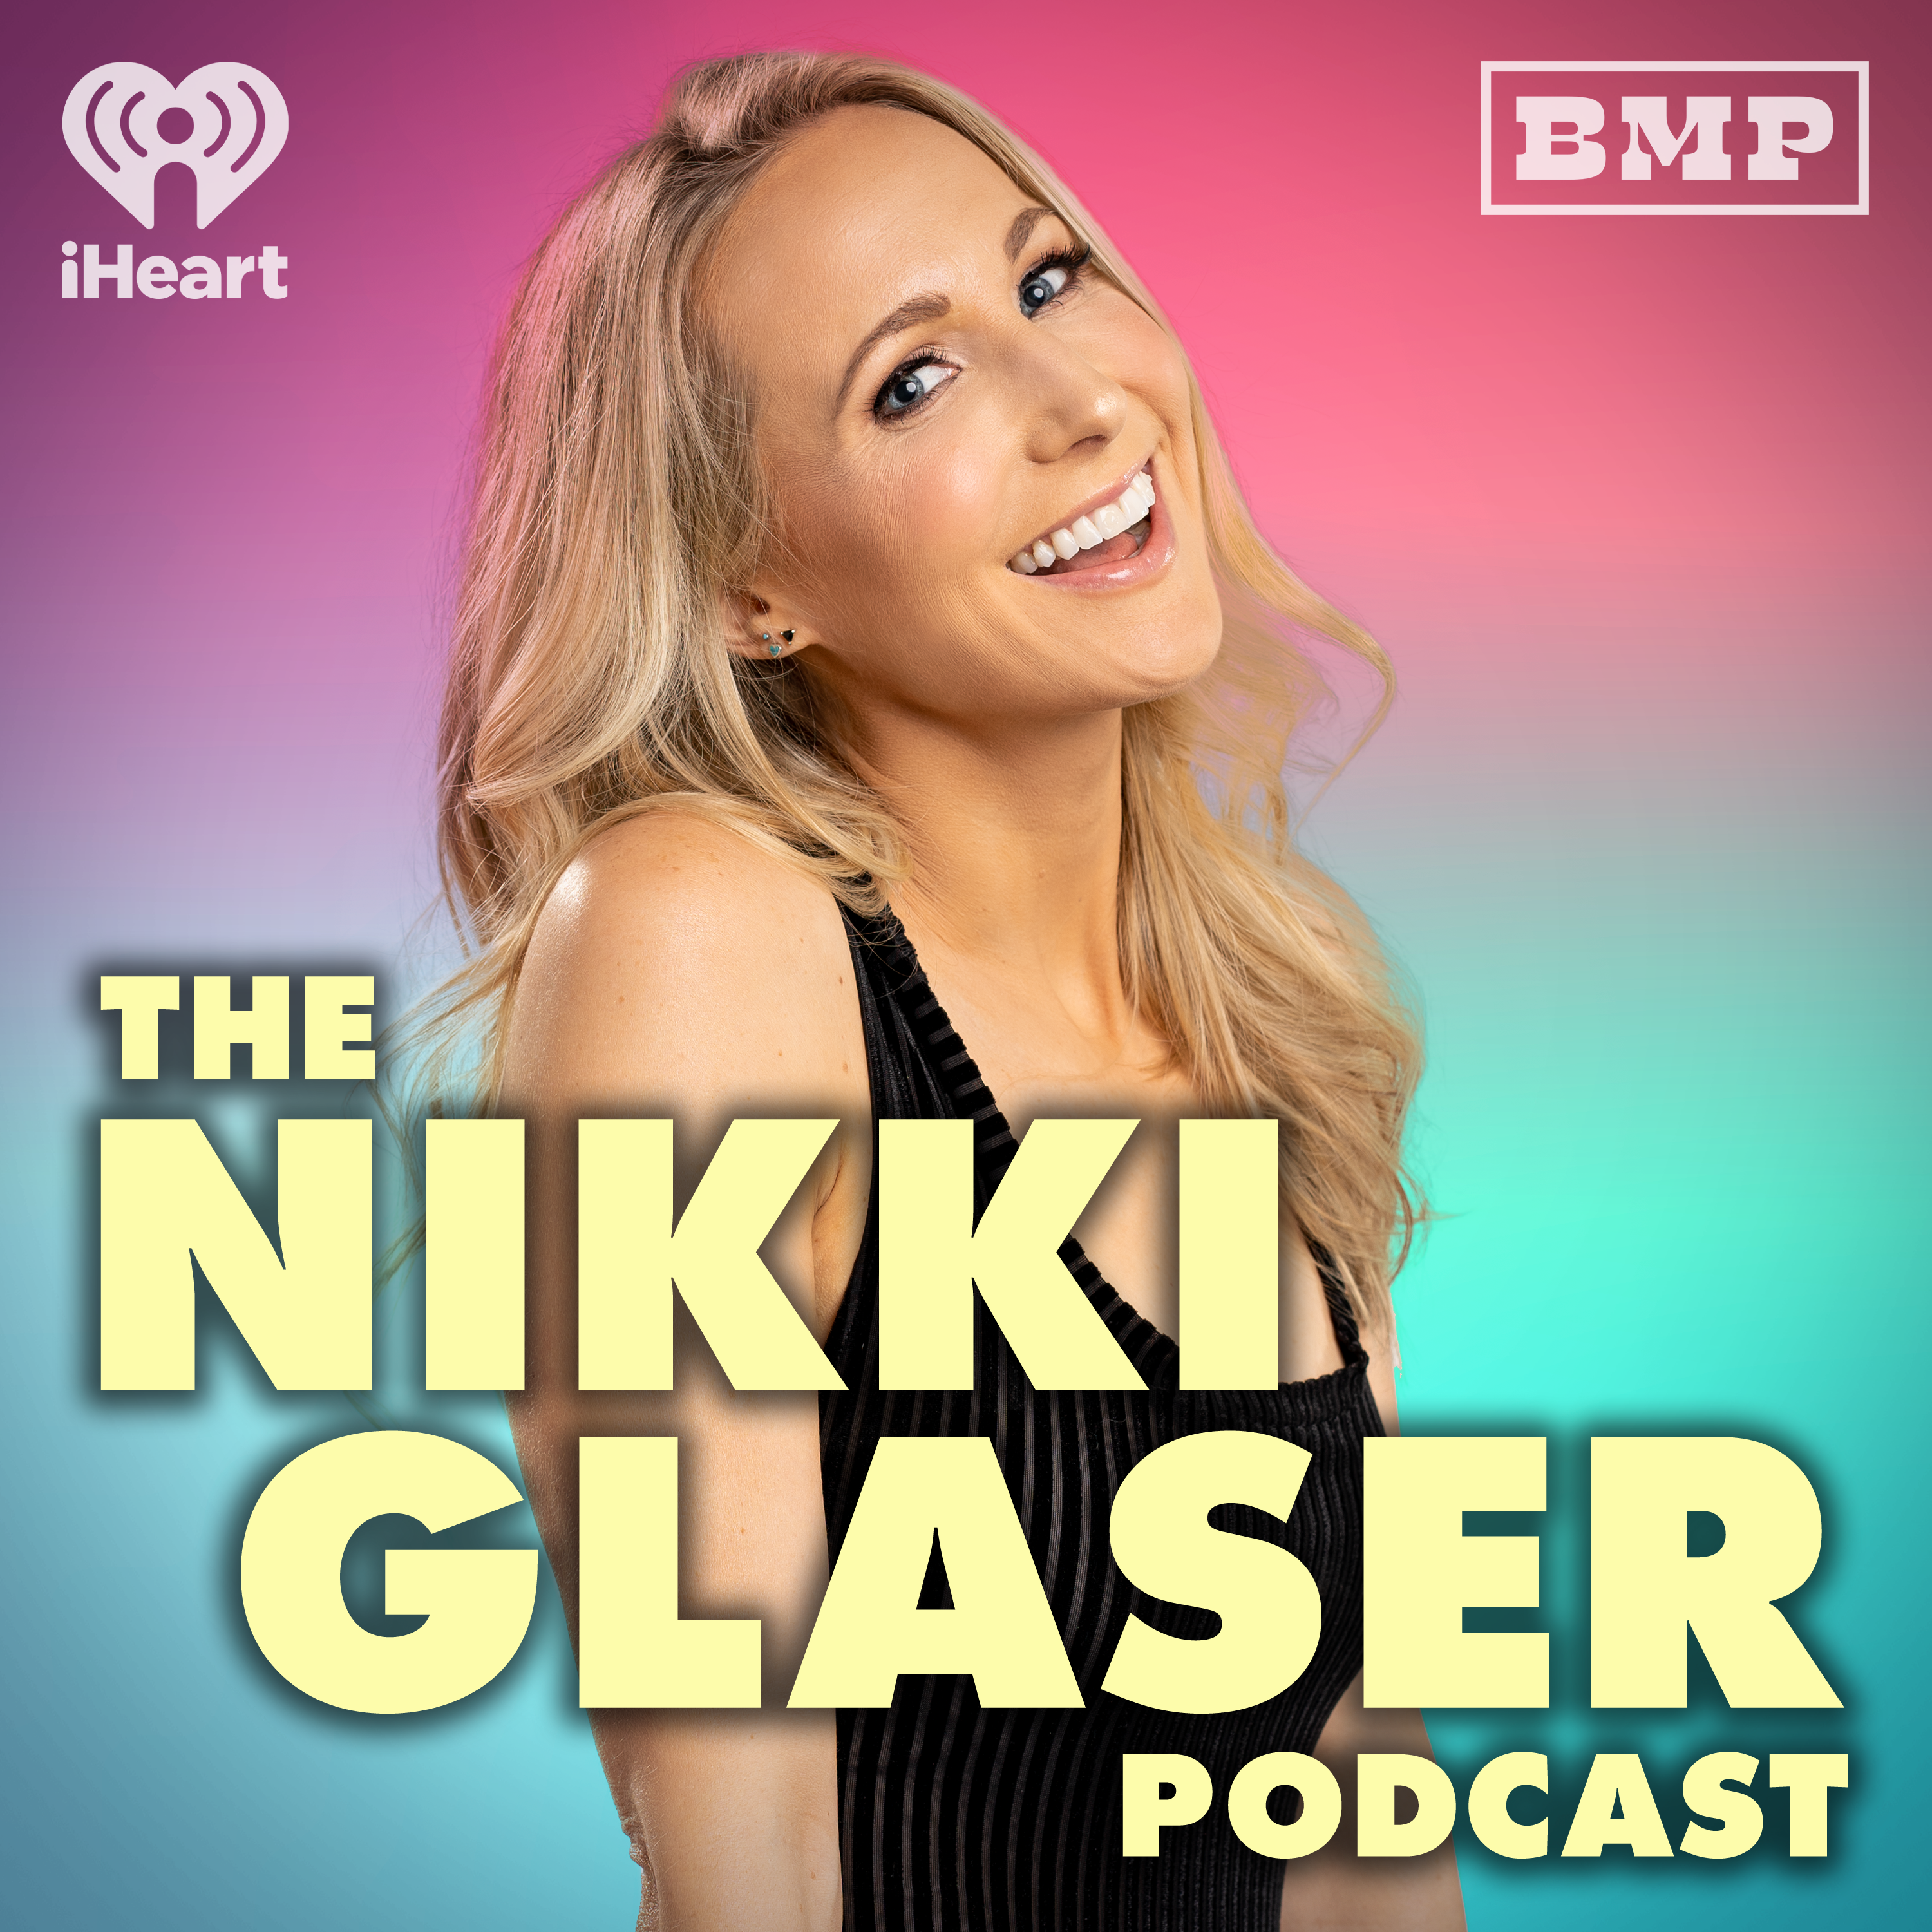 The Nikki Glaser Podcast podcast show image